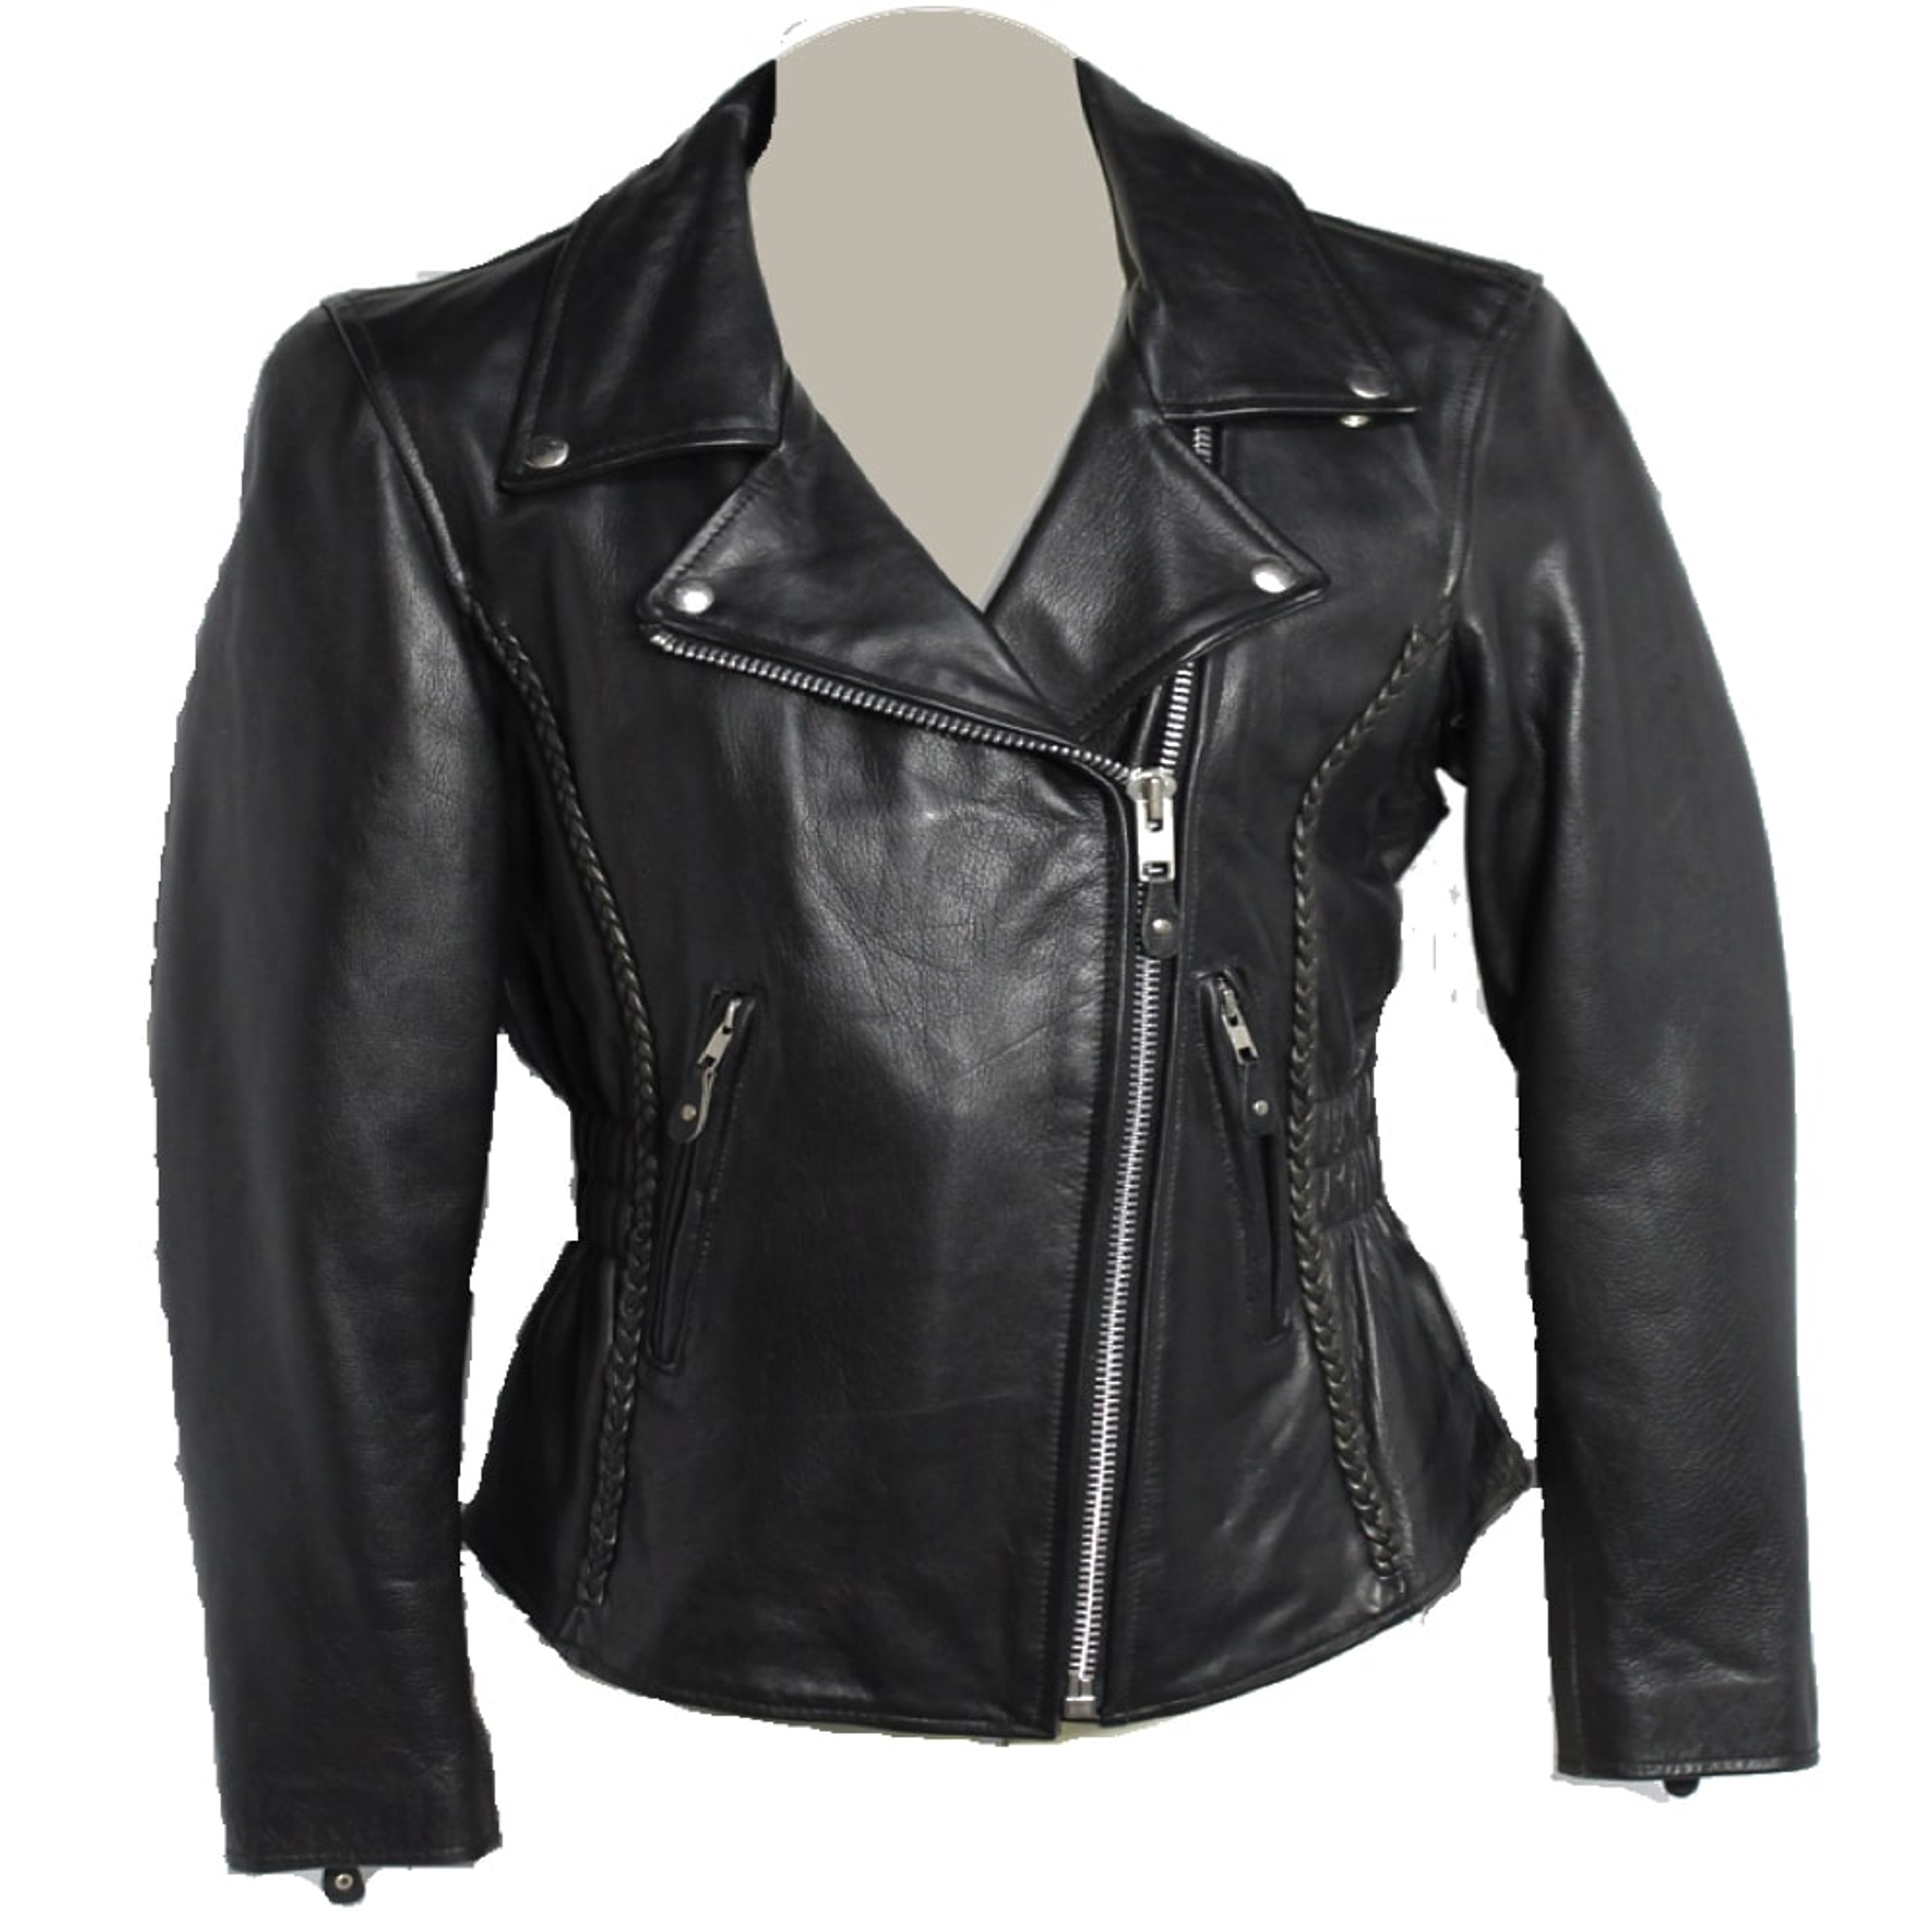 Women's Riding Gear - Women's Leather Jackets - Papa's Leather